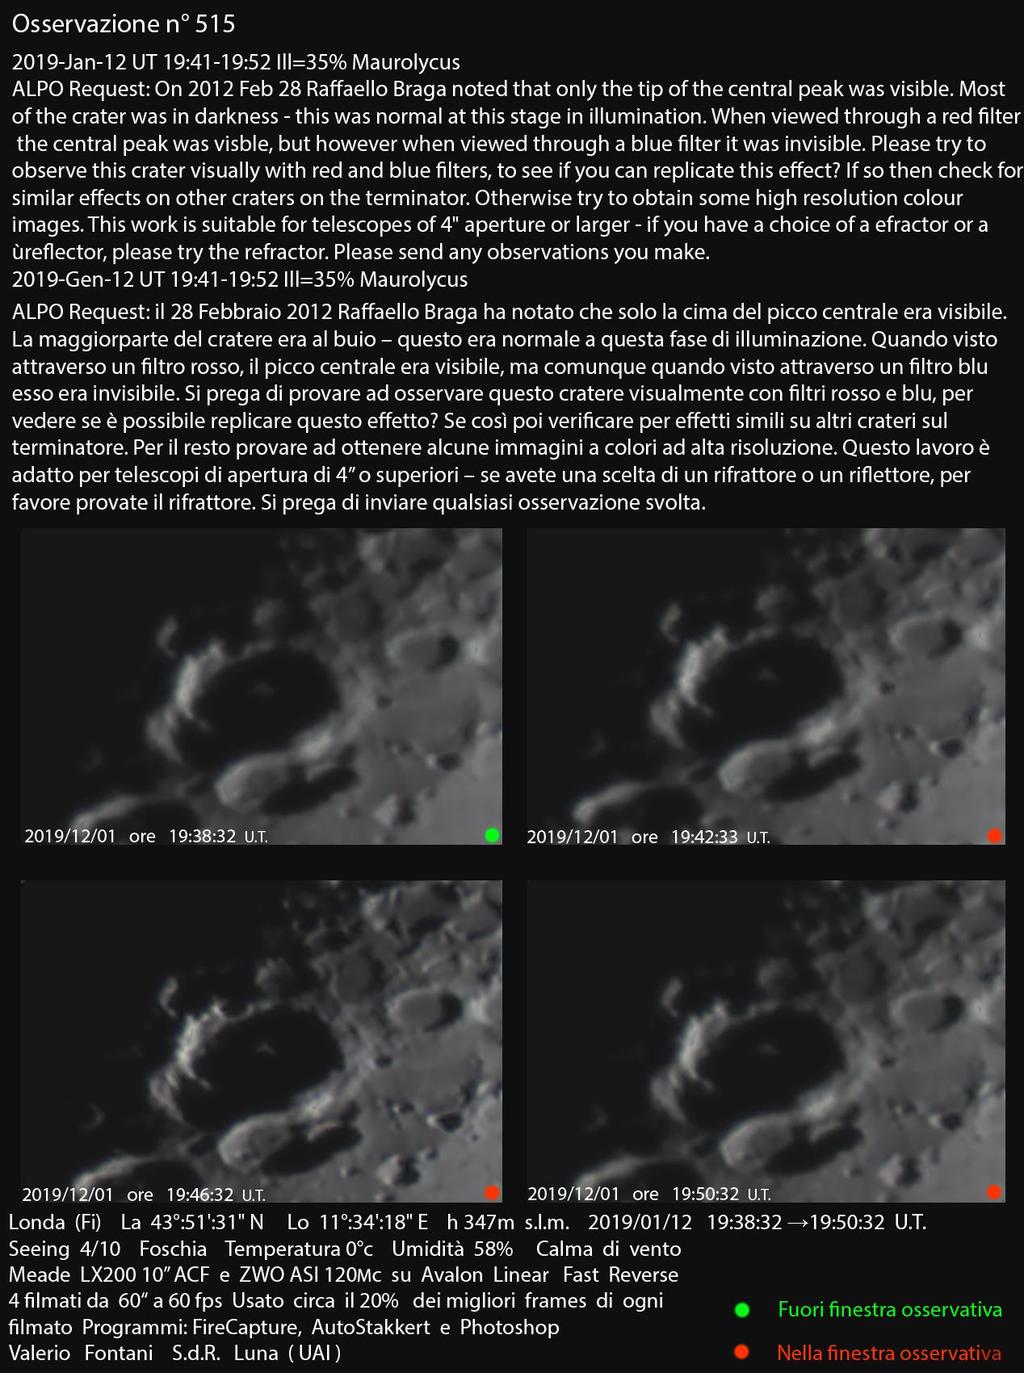 Lunar Geological Change Detection & Transient Lunar Phenomena Oss n 515